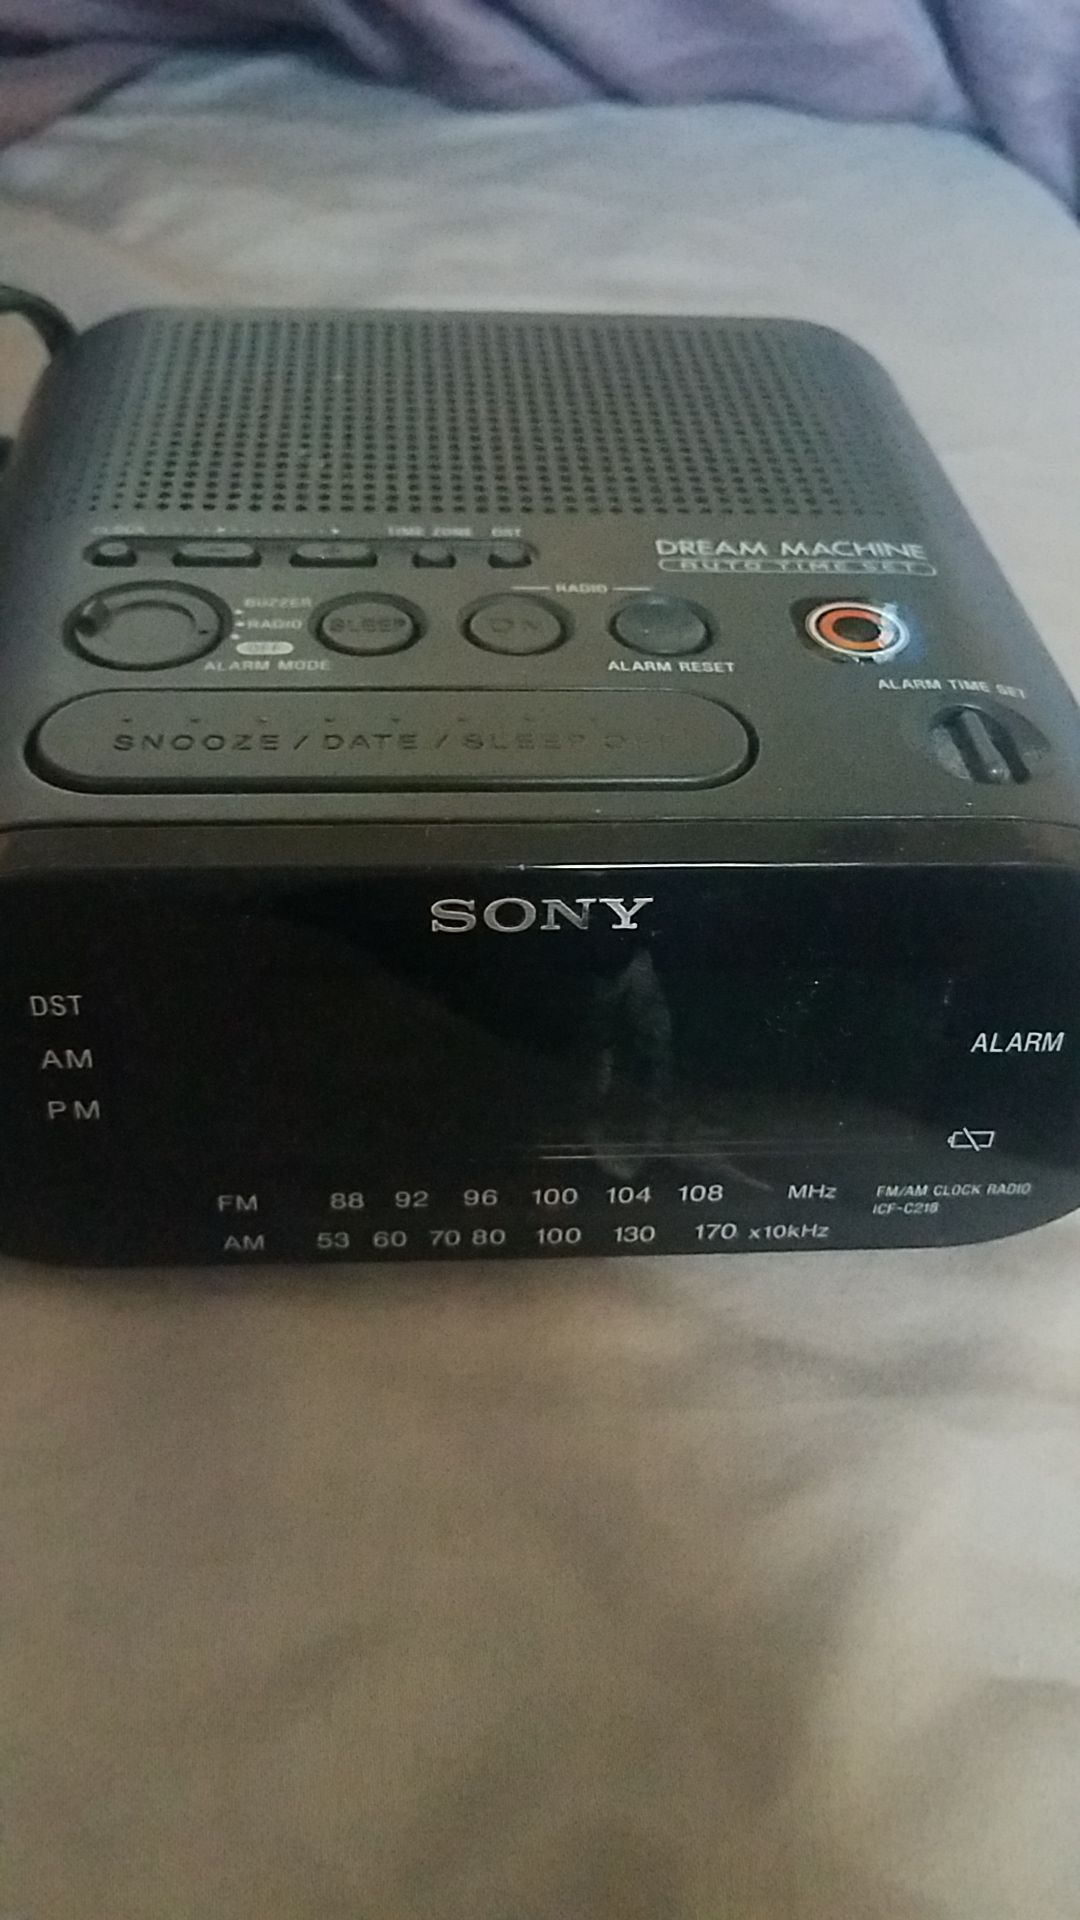 Sony Dream Machine portable am/fm radio/alarm